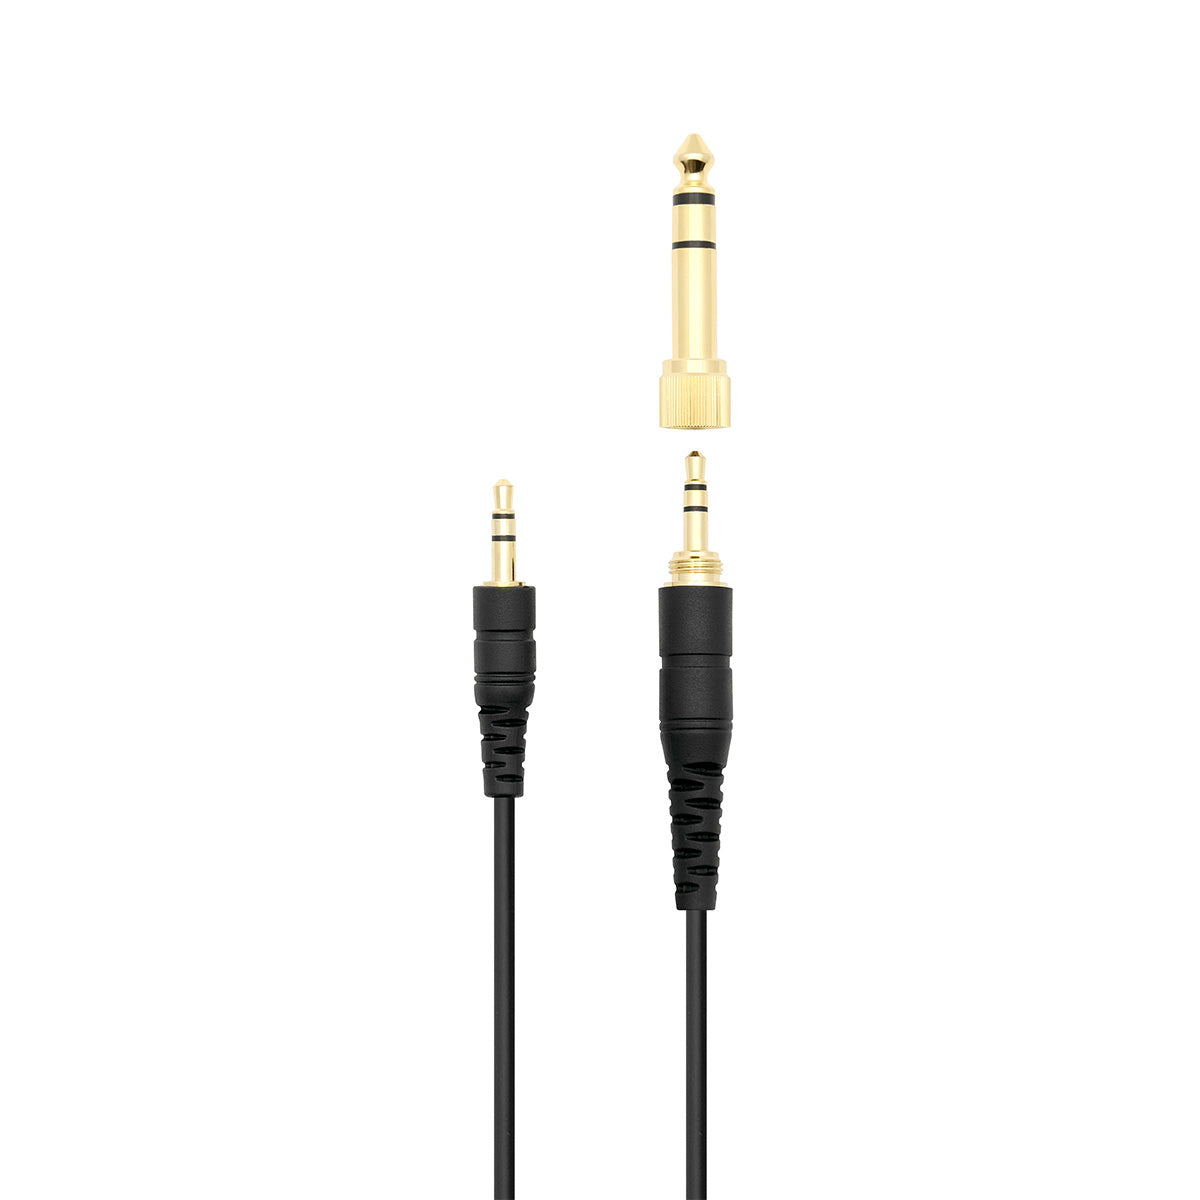 ADV. R32 Professional Studio Headphones Detachable Cable Boom Mic Volume Control Mute Switch